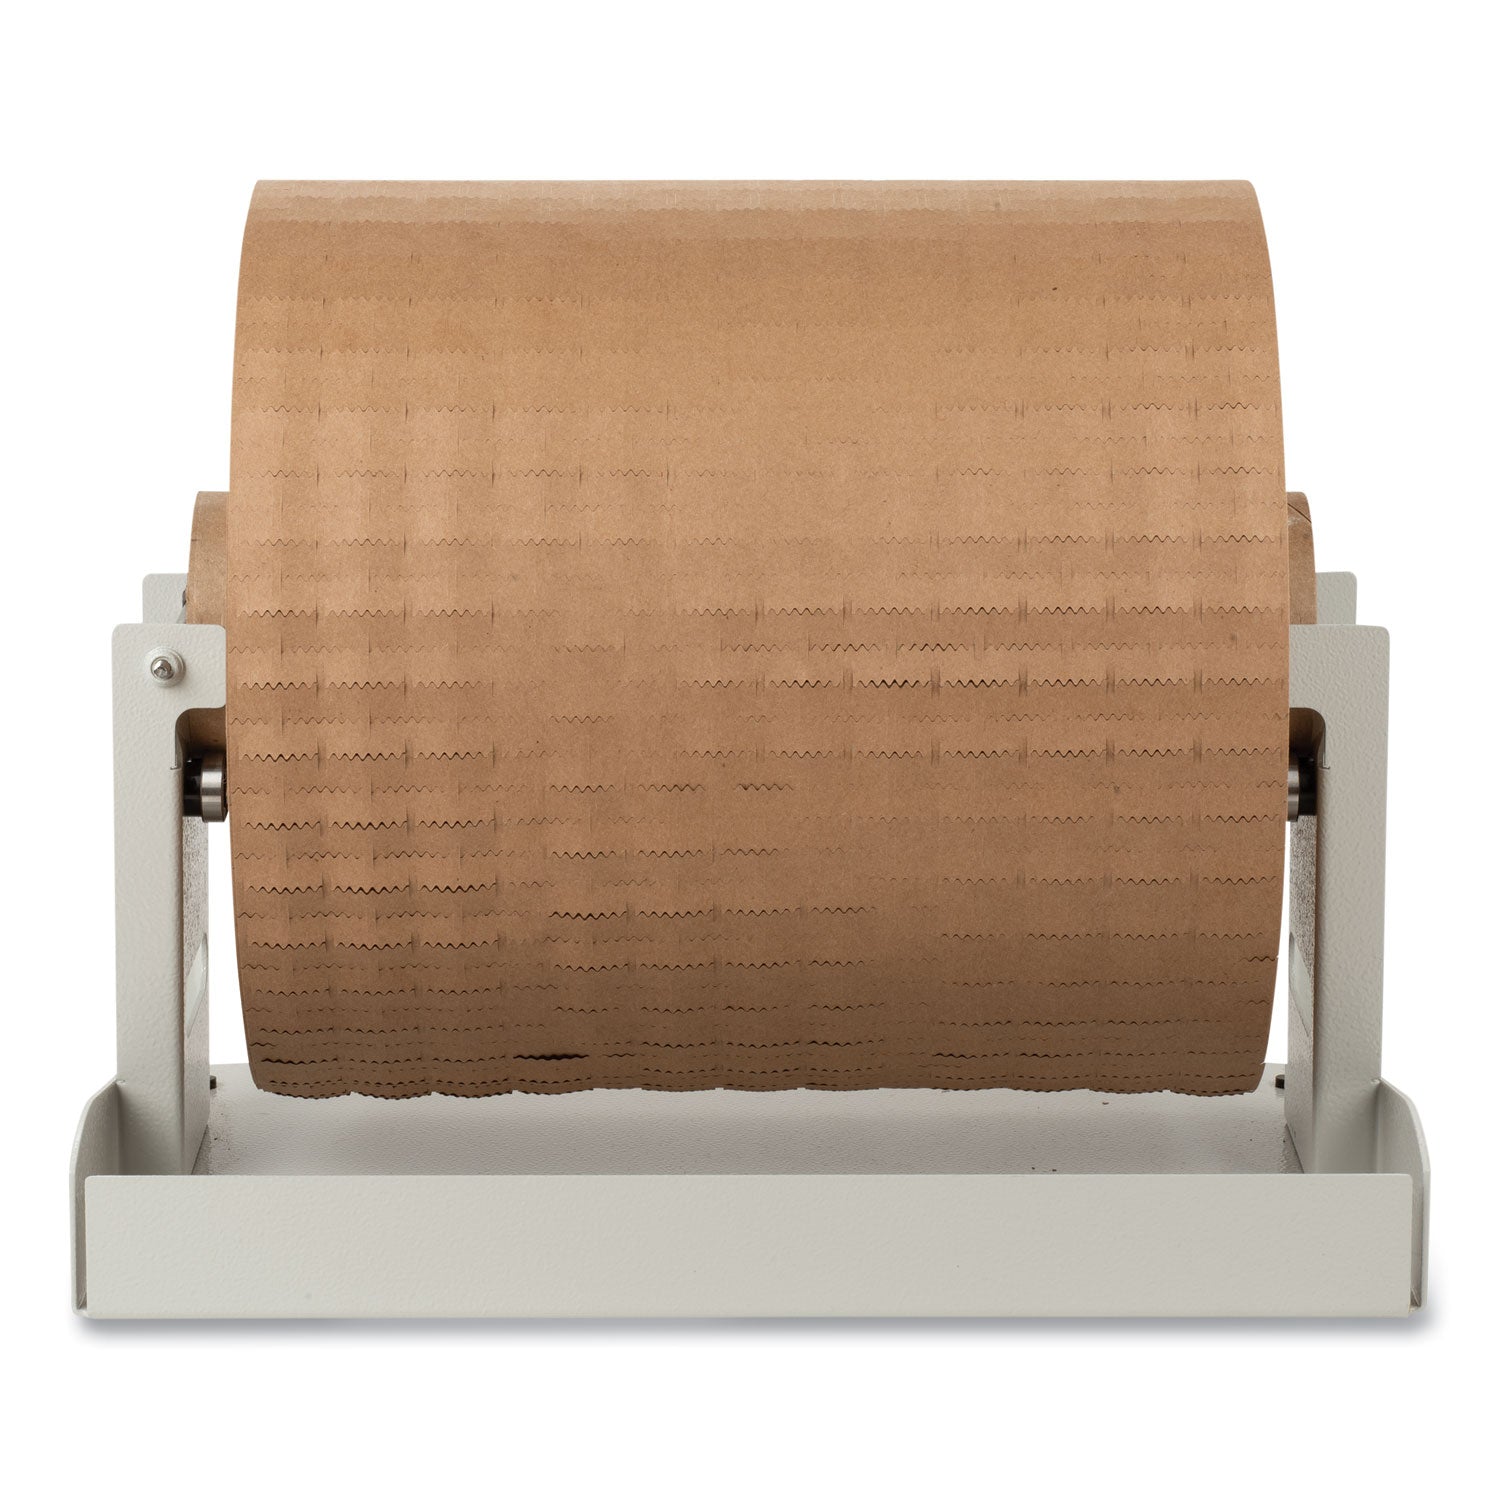 cushion-lock-protective-wrap-dispenser-for-up-to-16-diameter-x-12-wide-rolls-steel-beige_mmmpcw121000d - 2